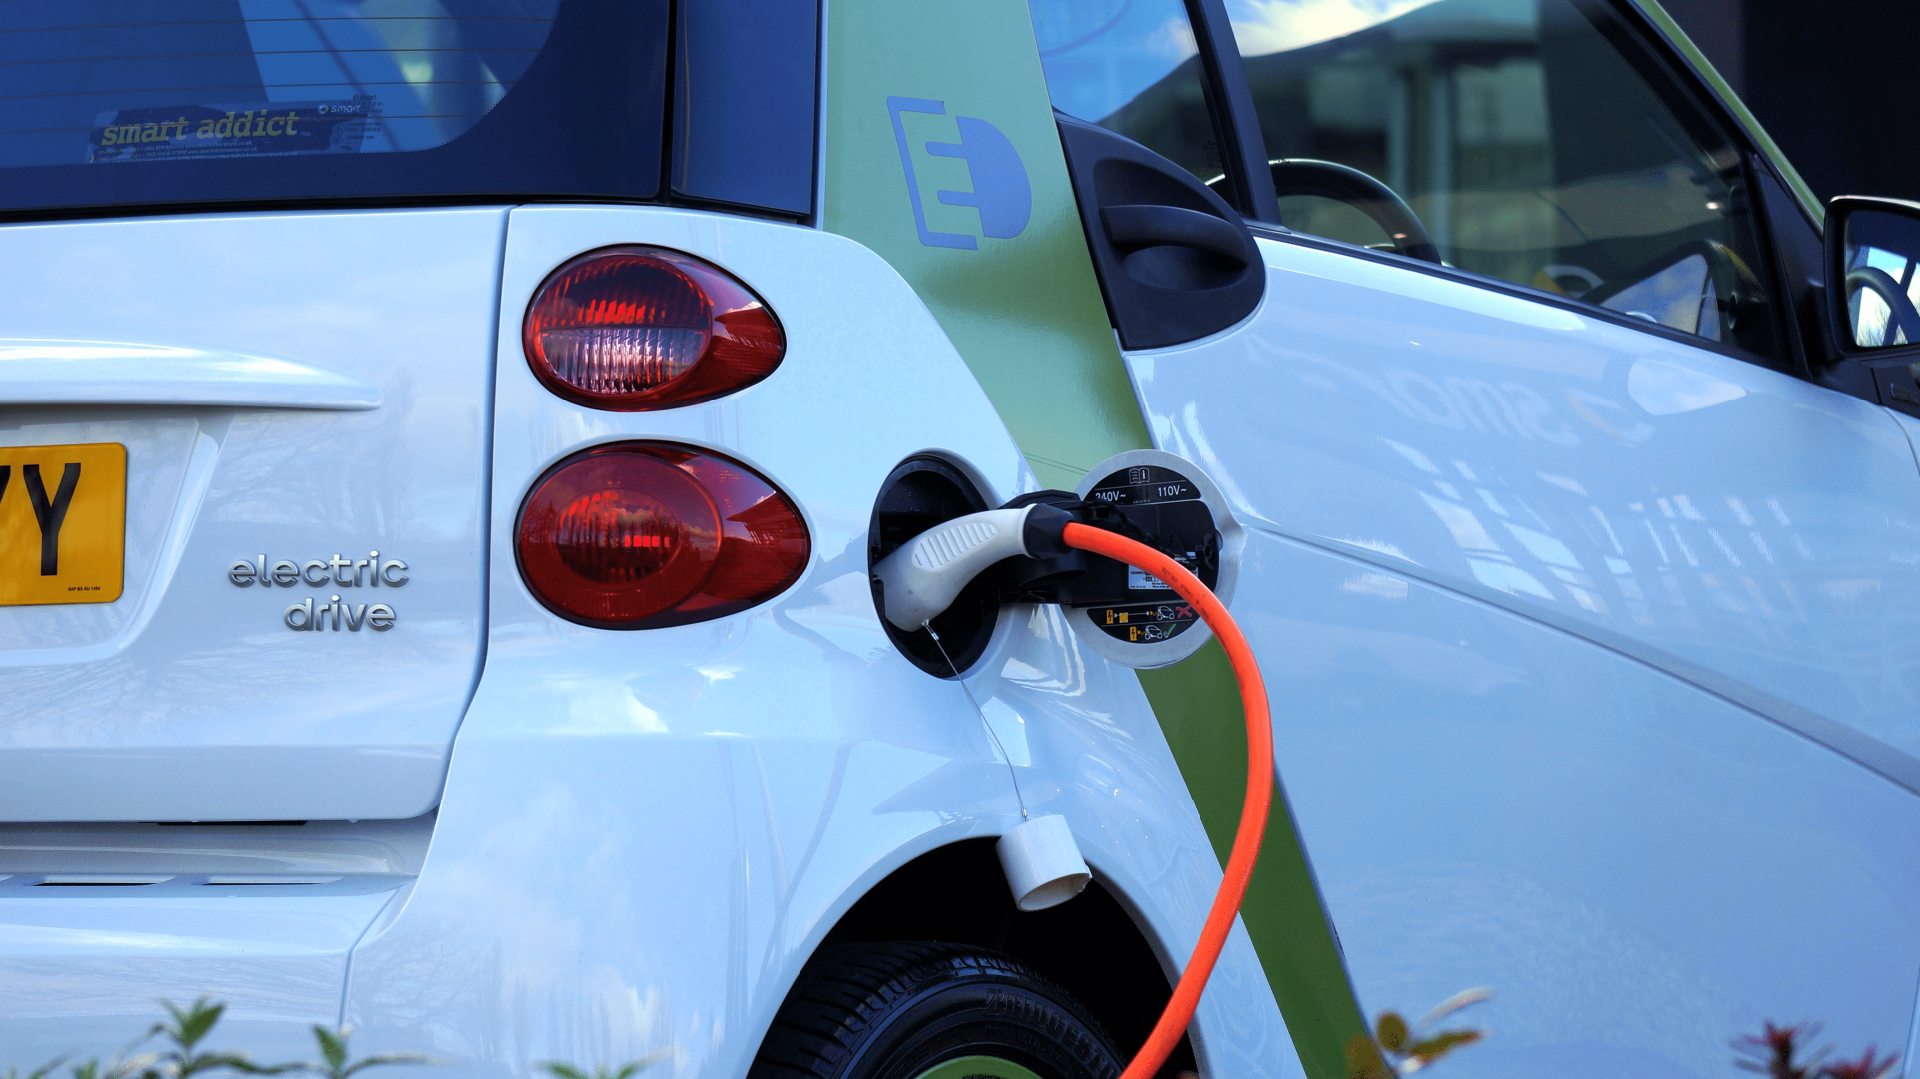 Electric vehicle batteries still present problems.